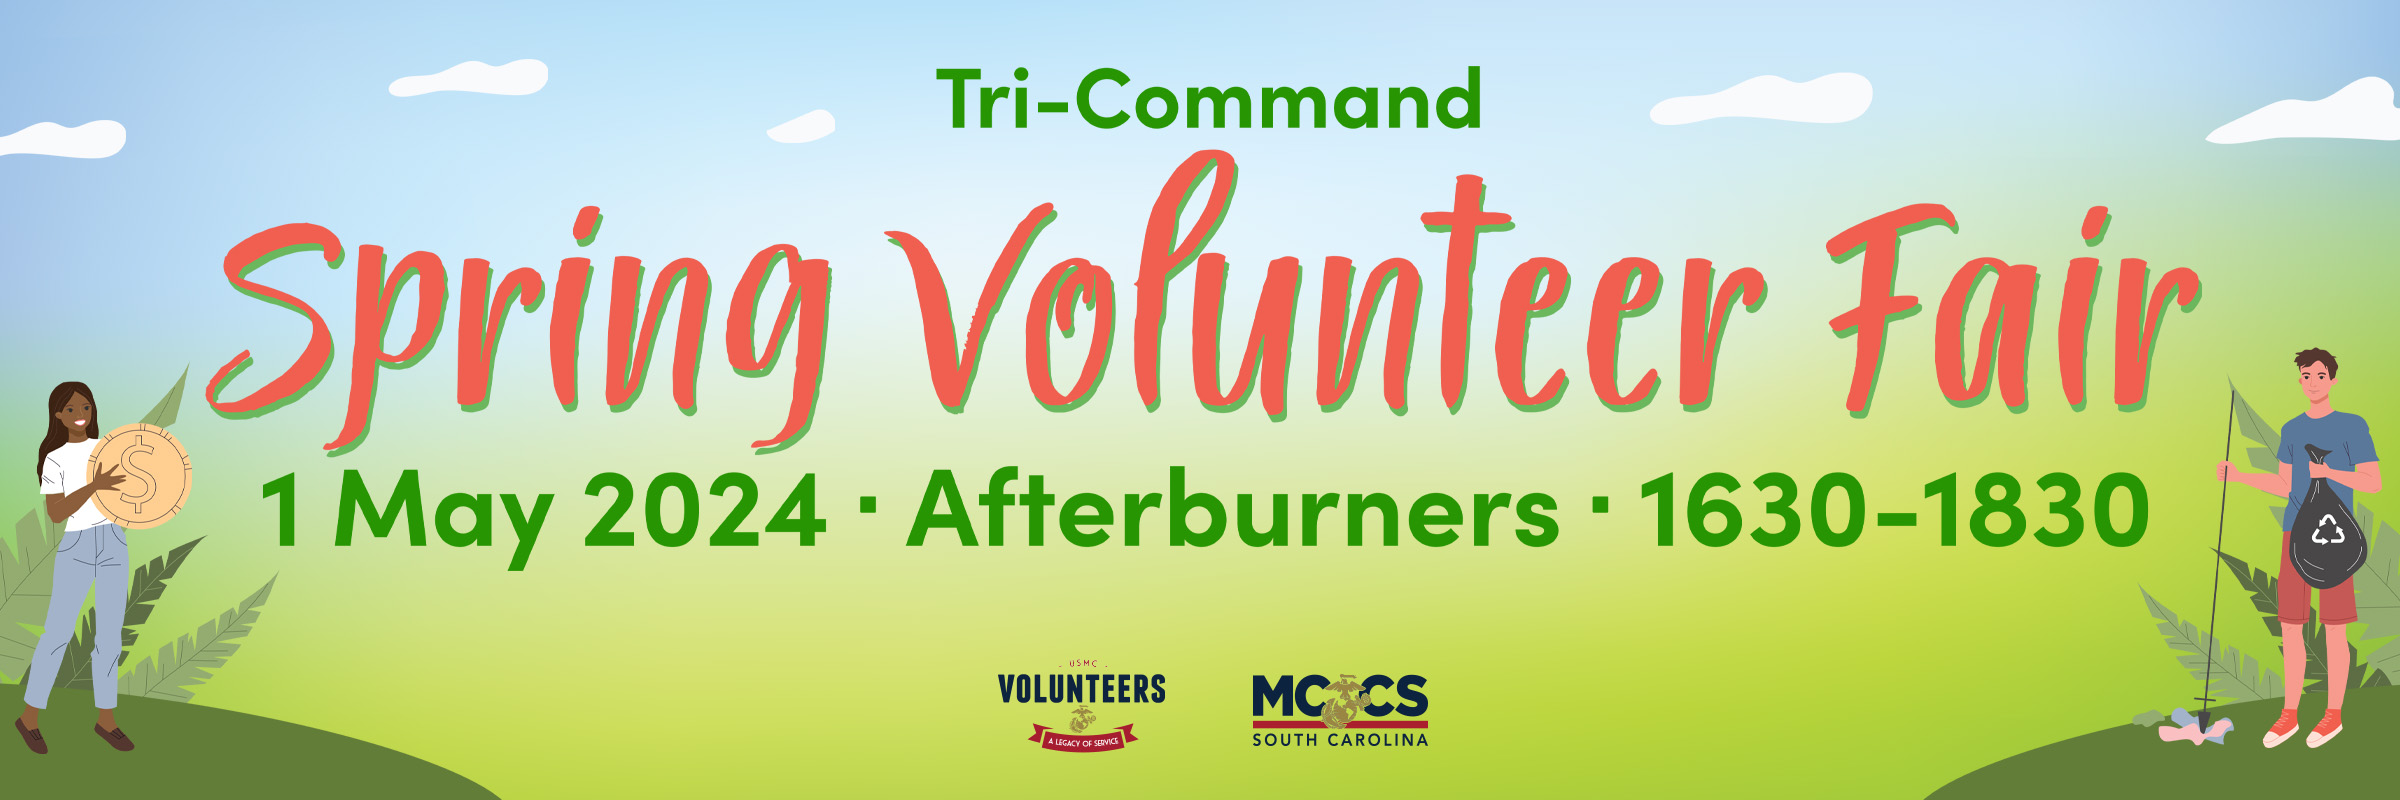 05-01 Tri-Command Spring Volunteer Fair_WEB.jpg